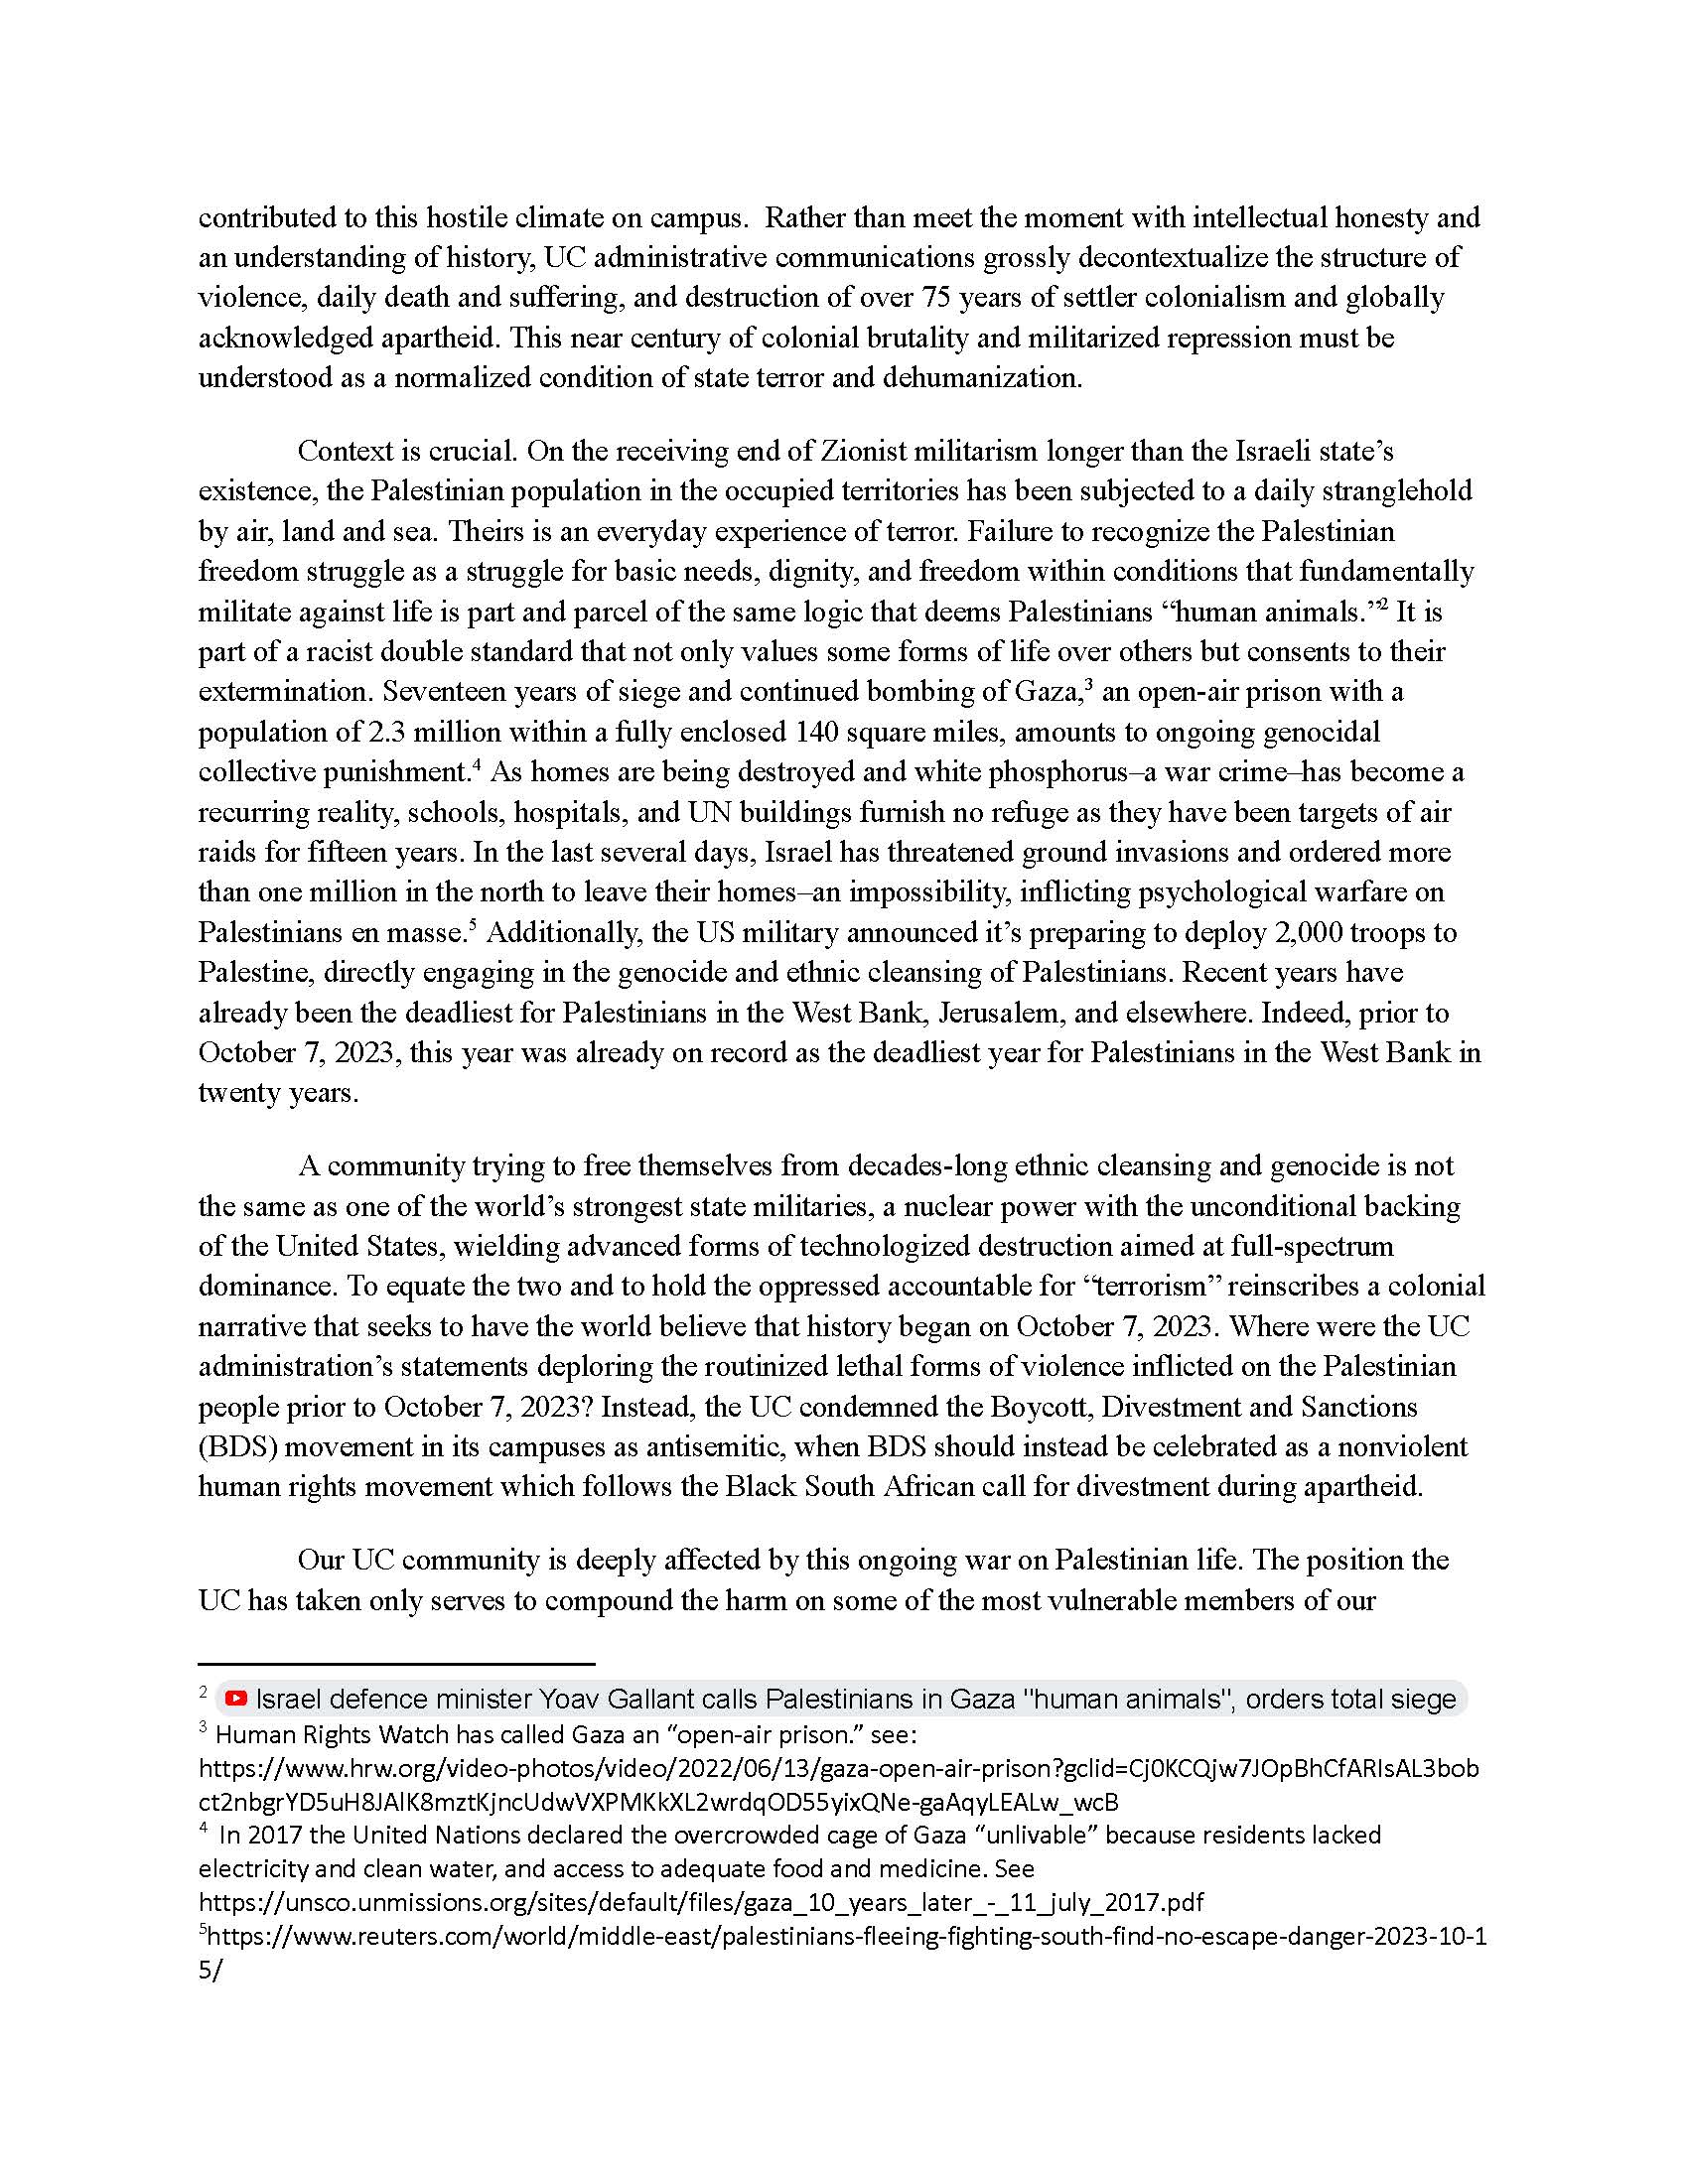 UC Statement Page 2